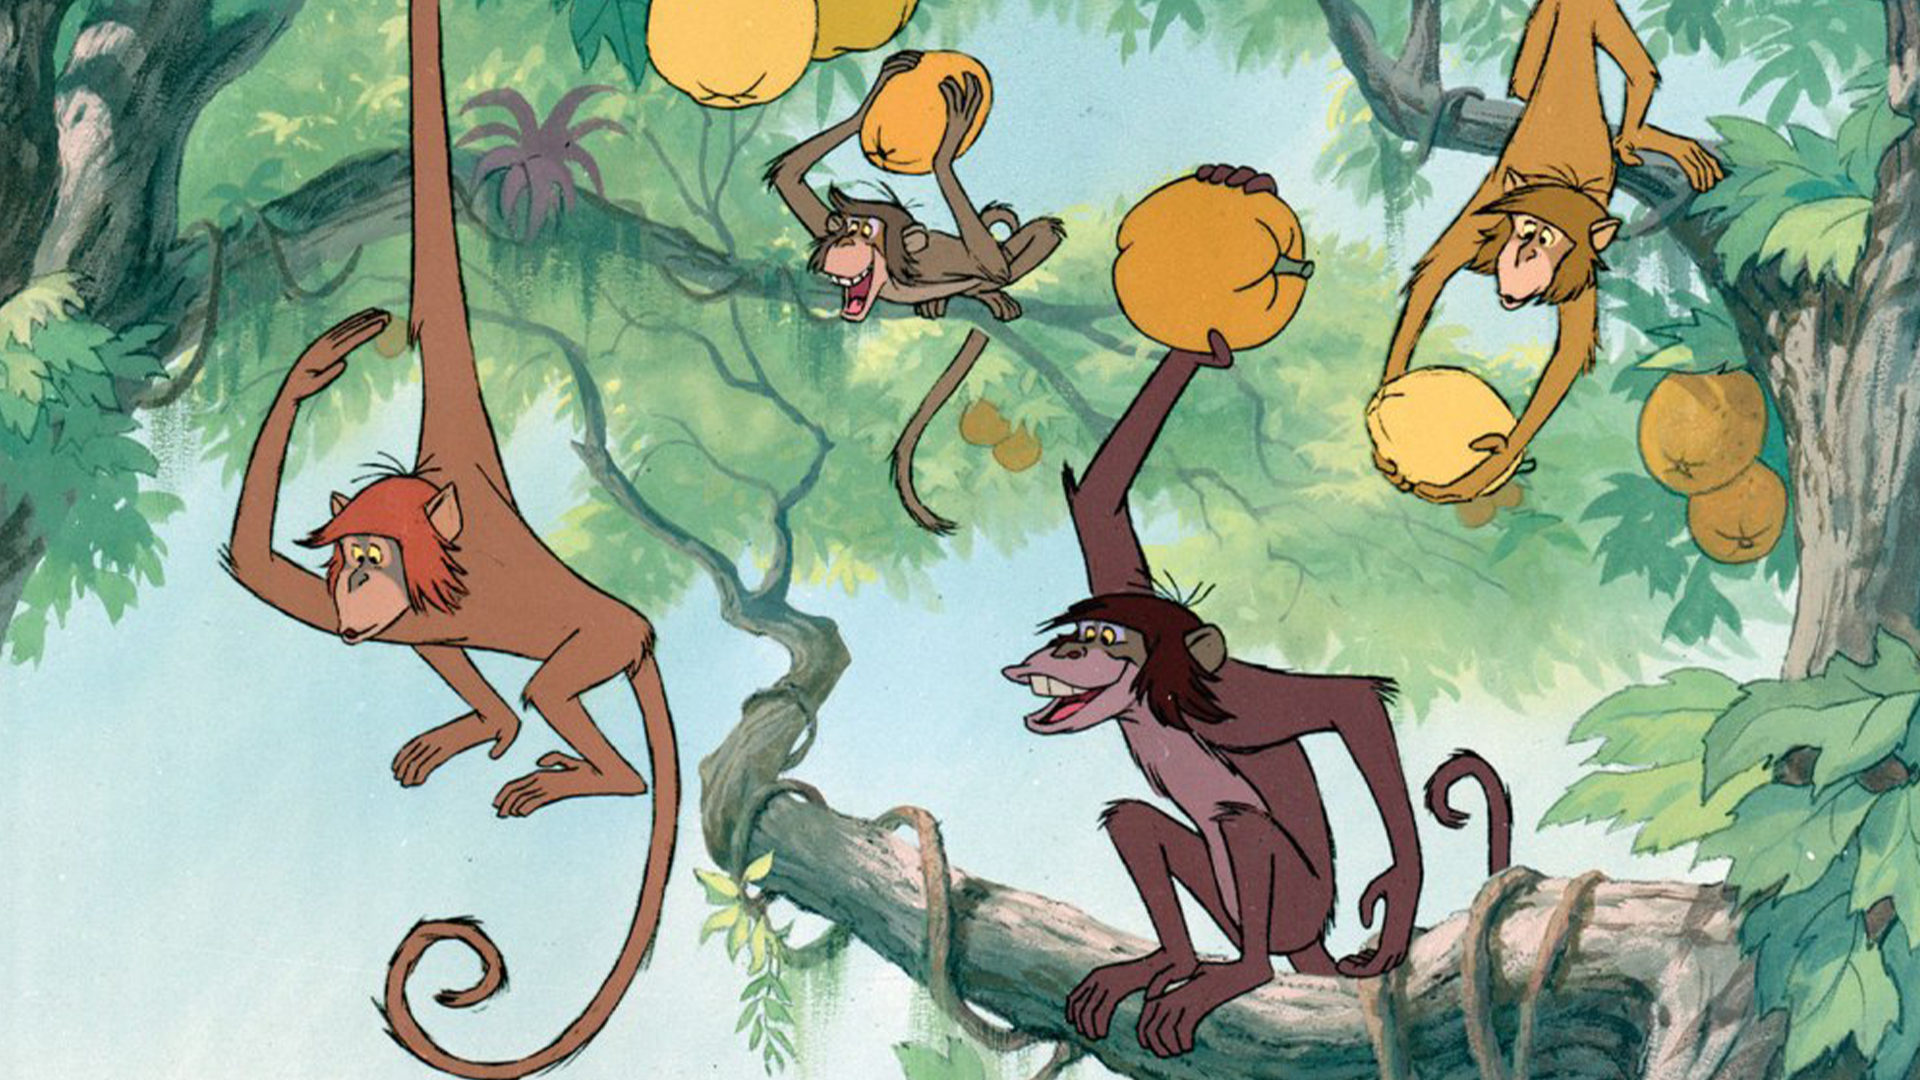 A scene from the Jungle Book